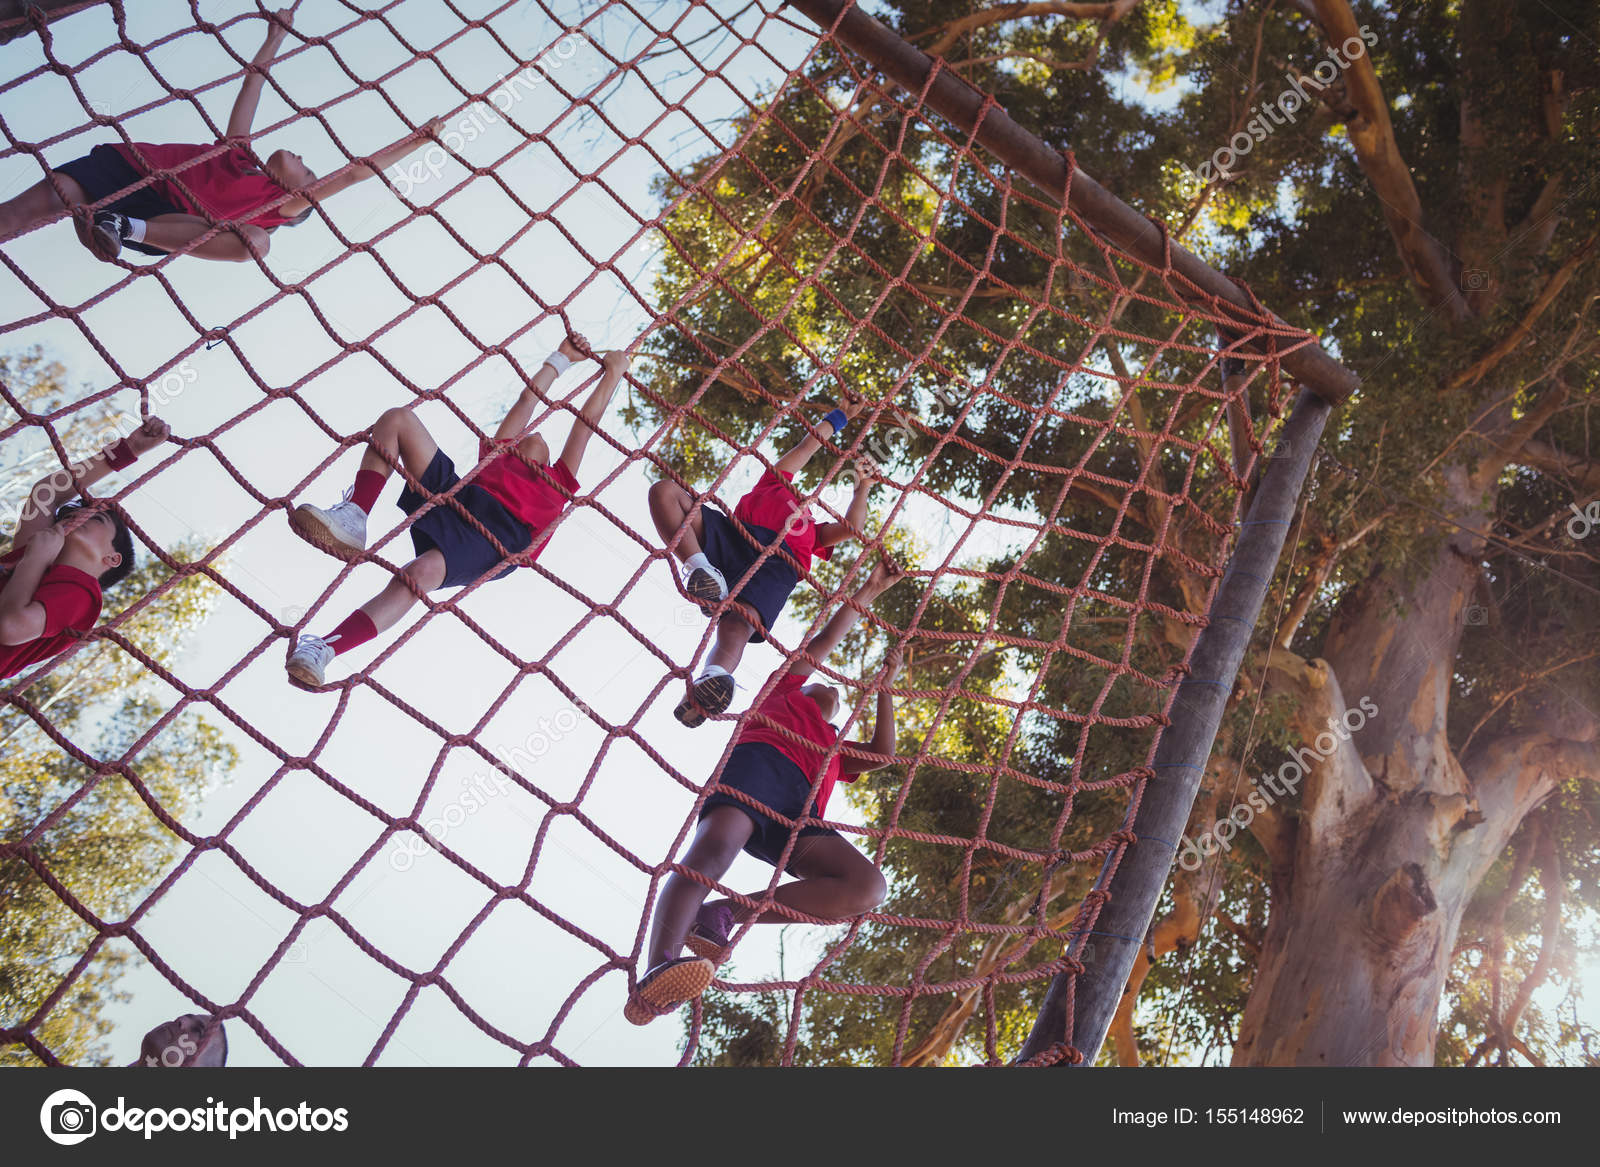 Kids climbing net — Stock Photo © Wavebreakmedia #155148962